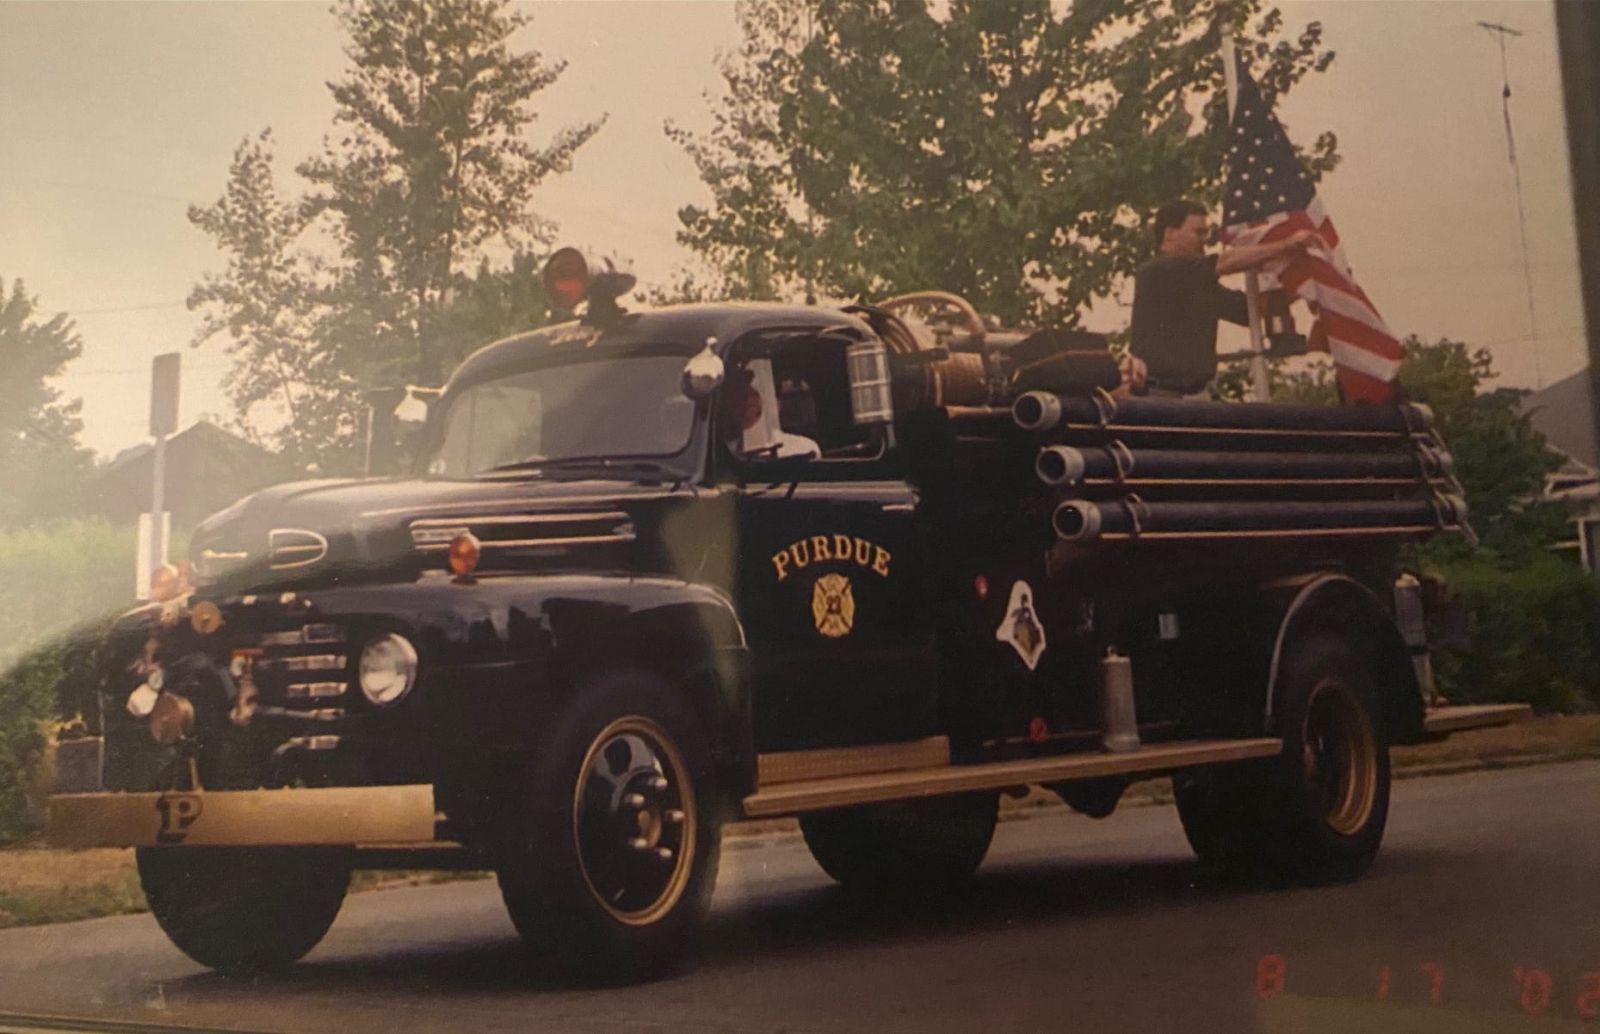 Wayne Ripberger once drove a Purdue fire truck around campus. (Photo courtesy Wayne Ripberger)